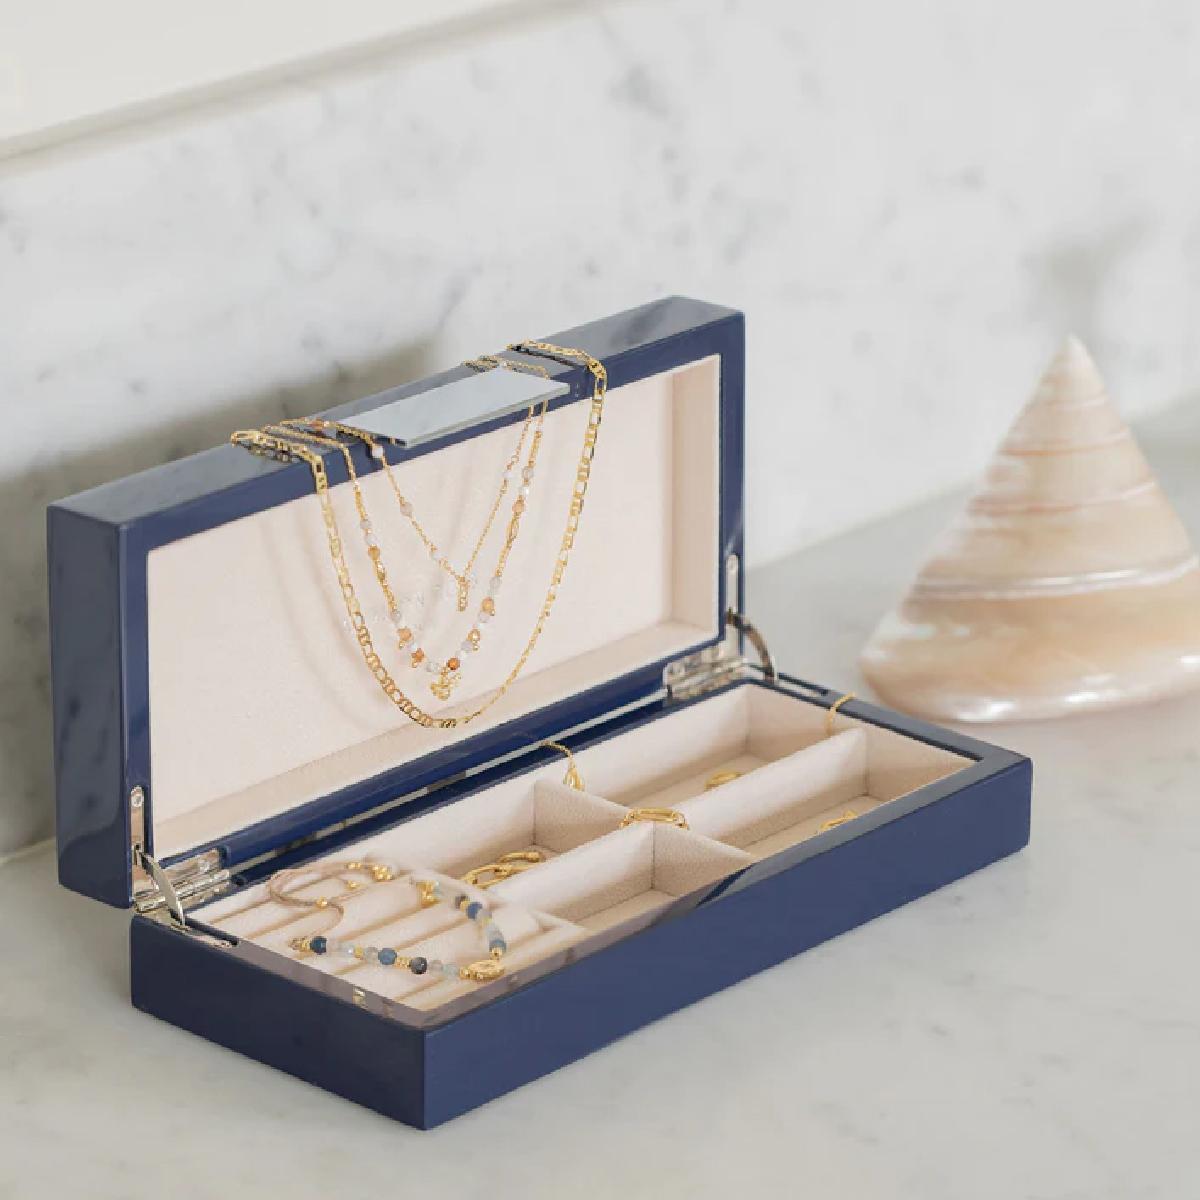 Addison Ross - Navy Blue & Silver Jewelry Box